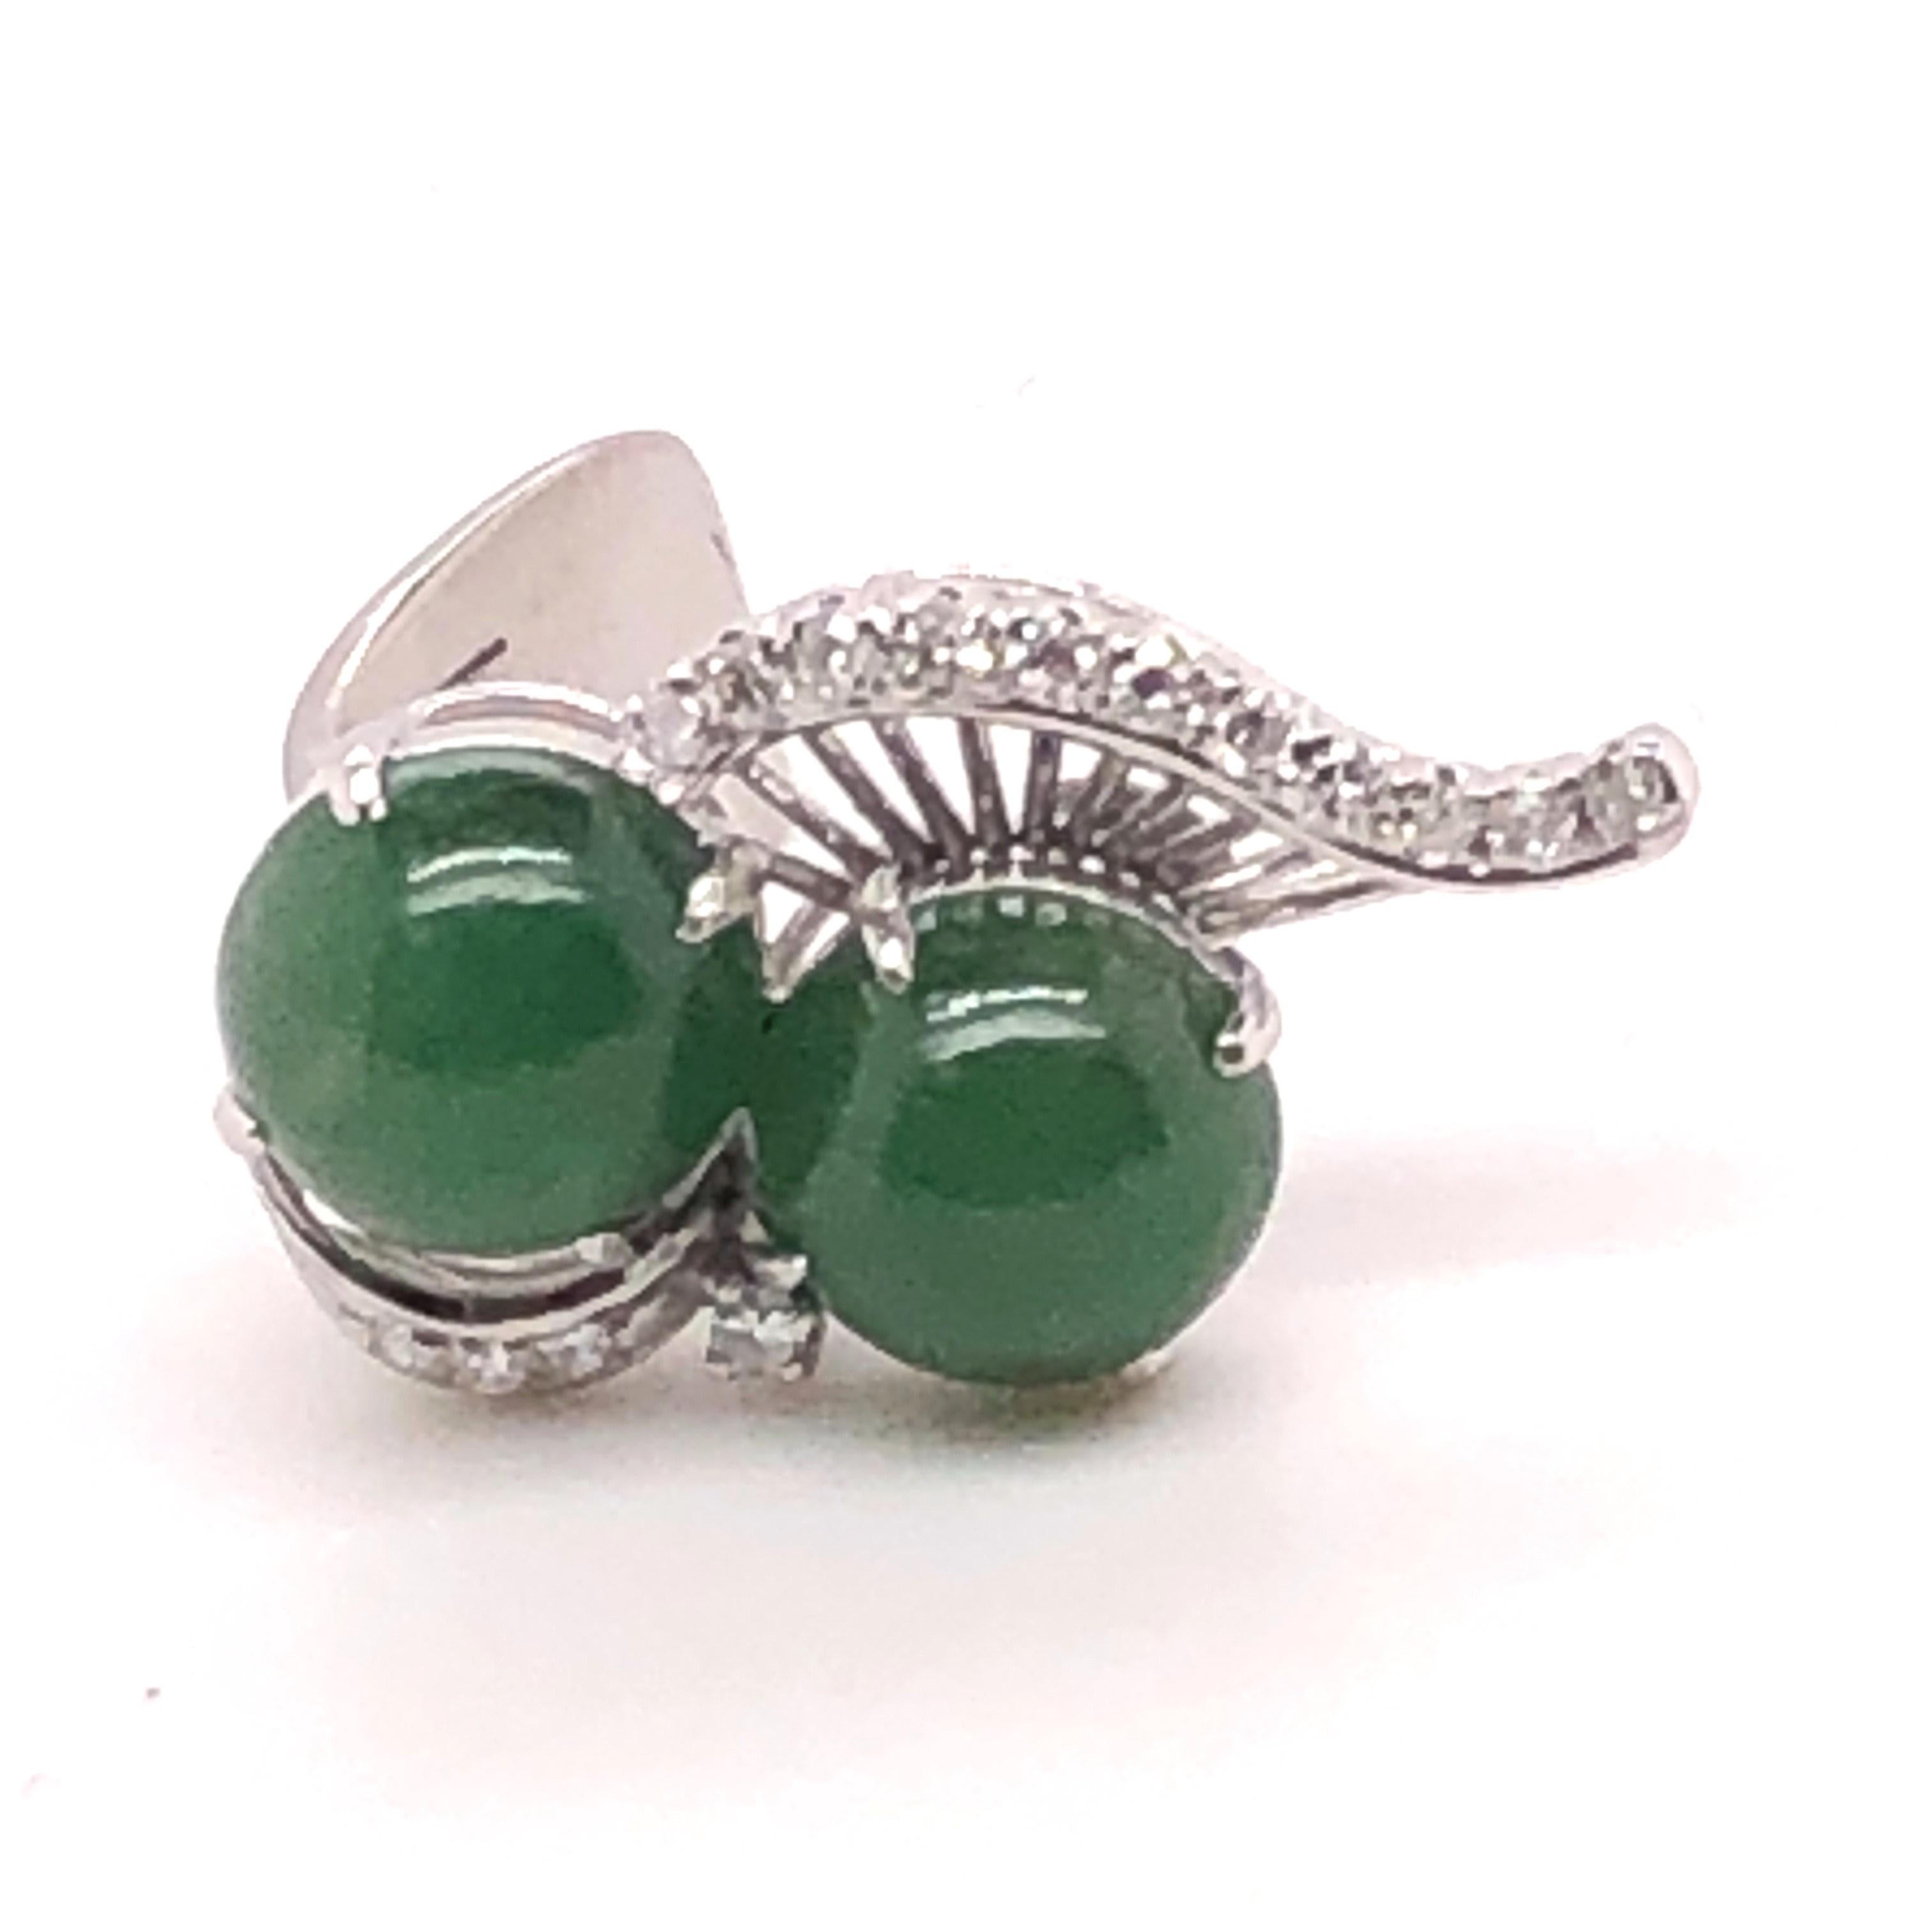 jade ball earrings